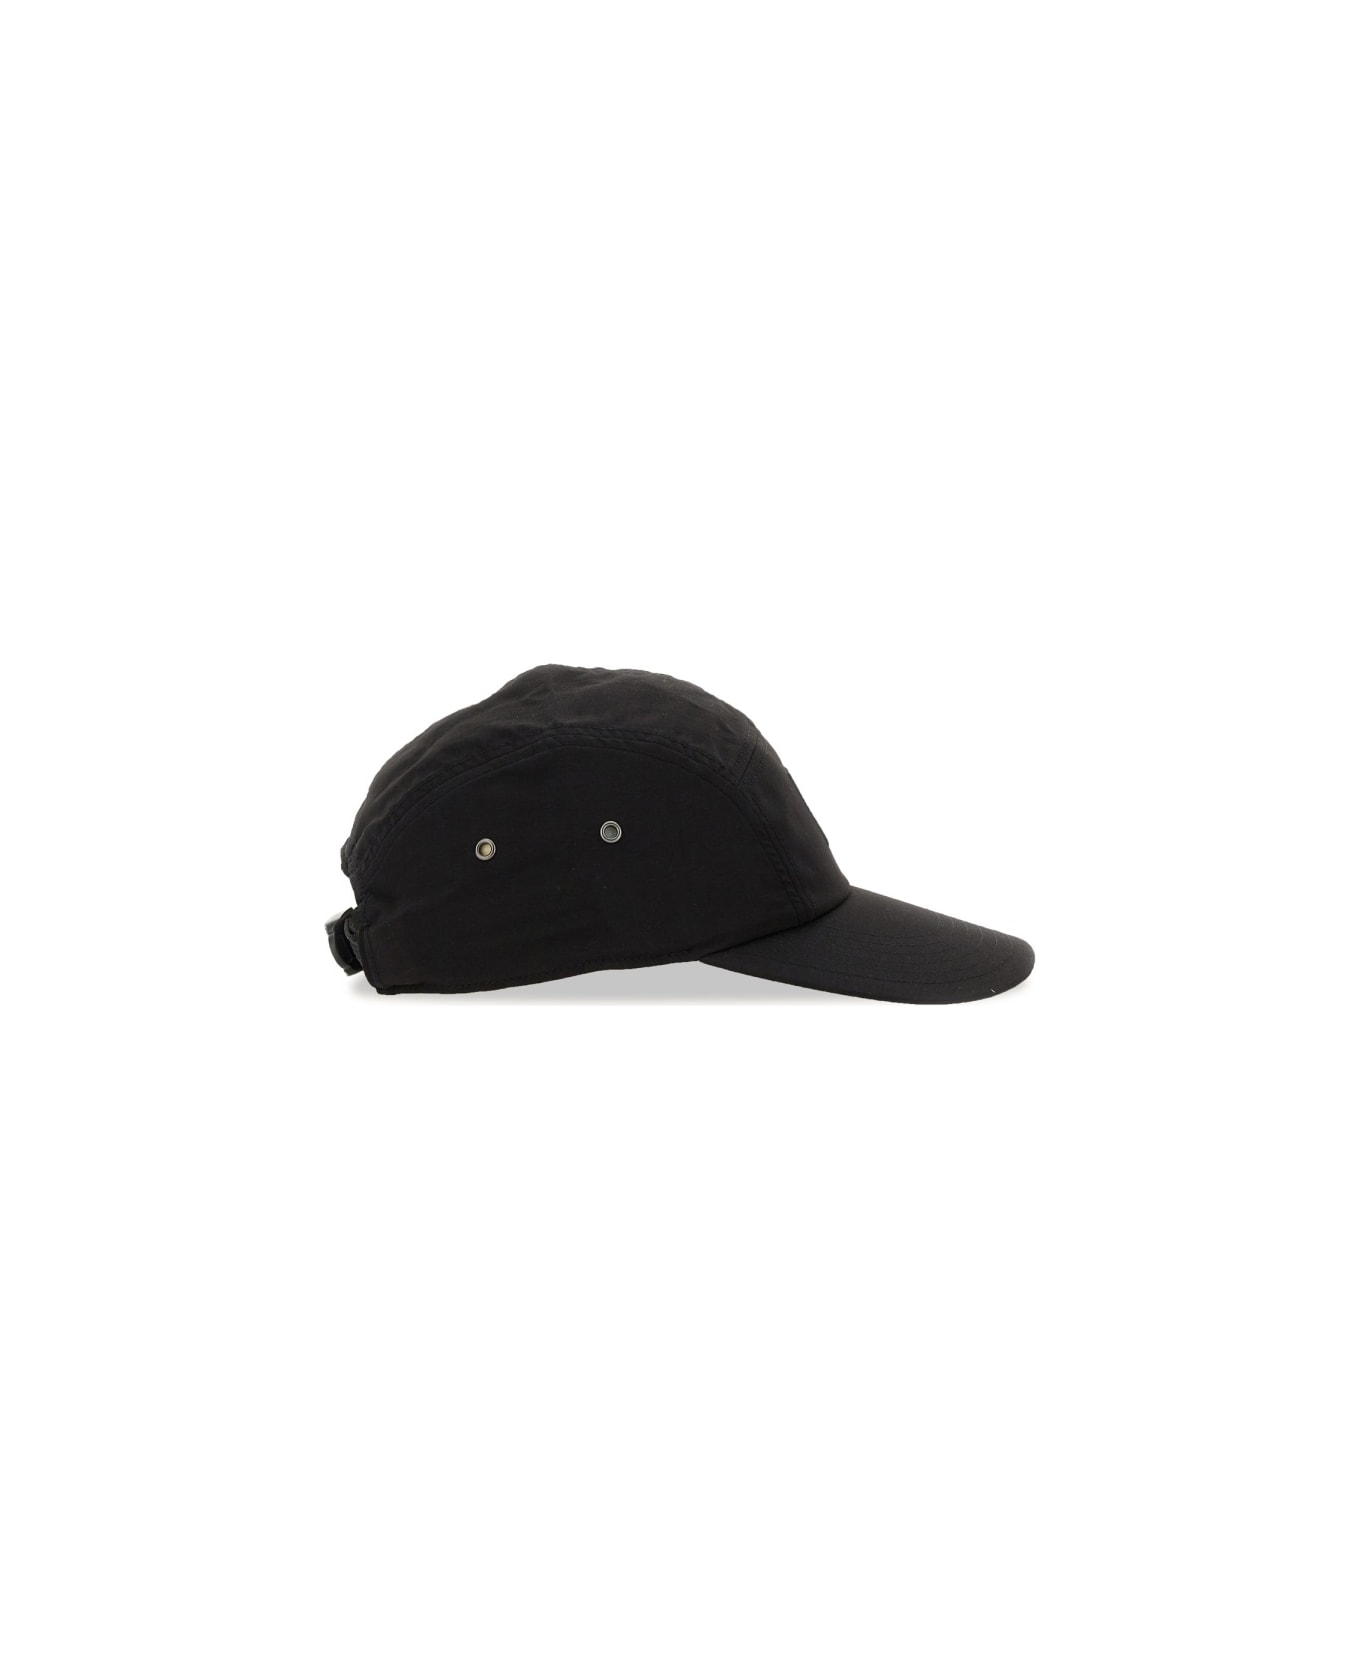 The North Face Baseball Cap - Black 帽子